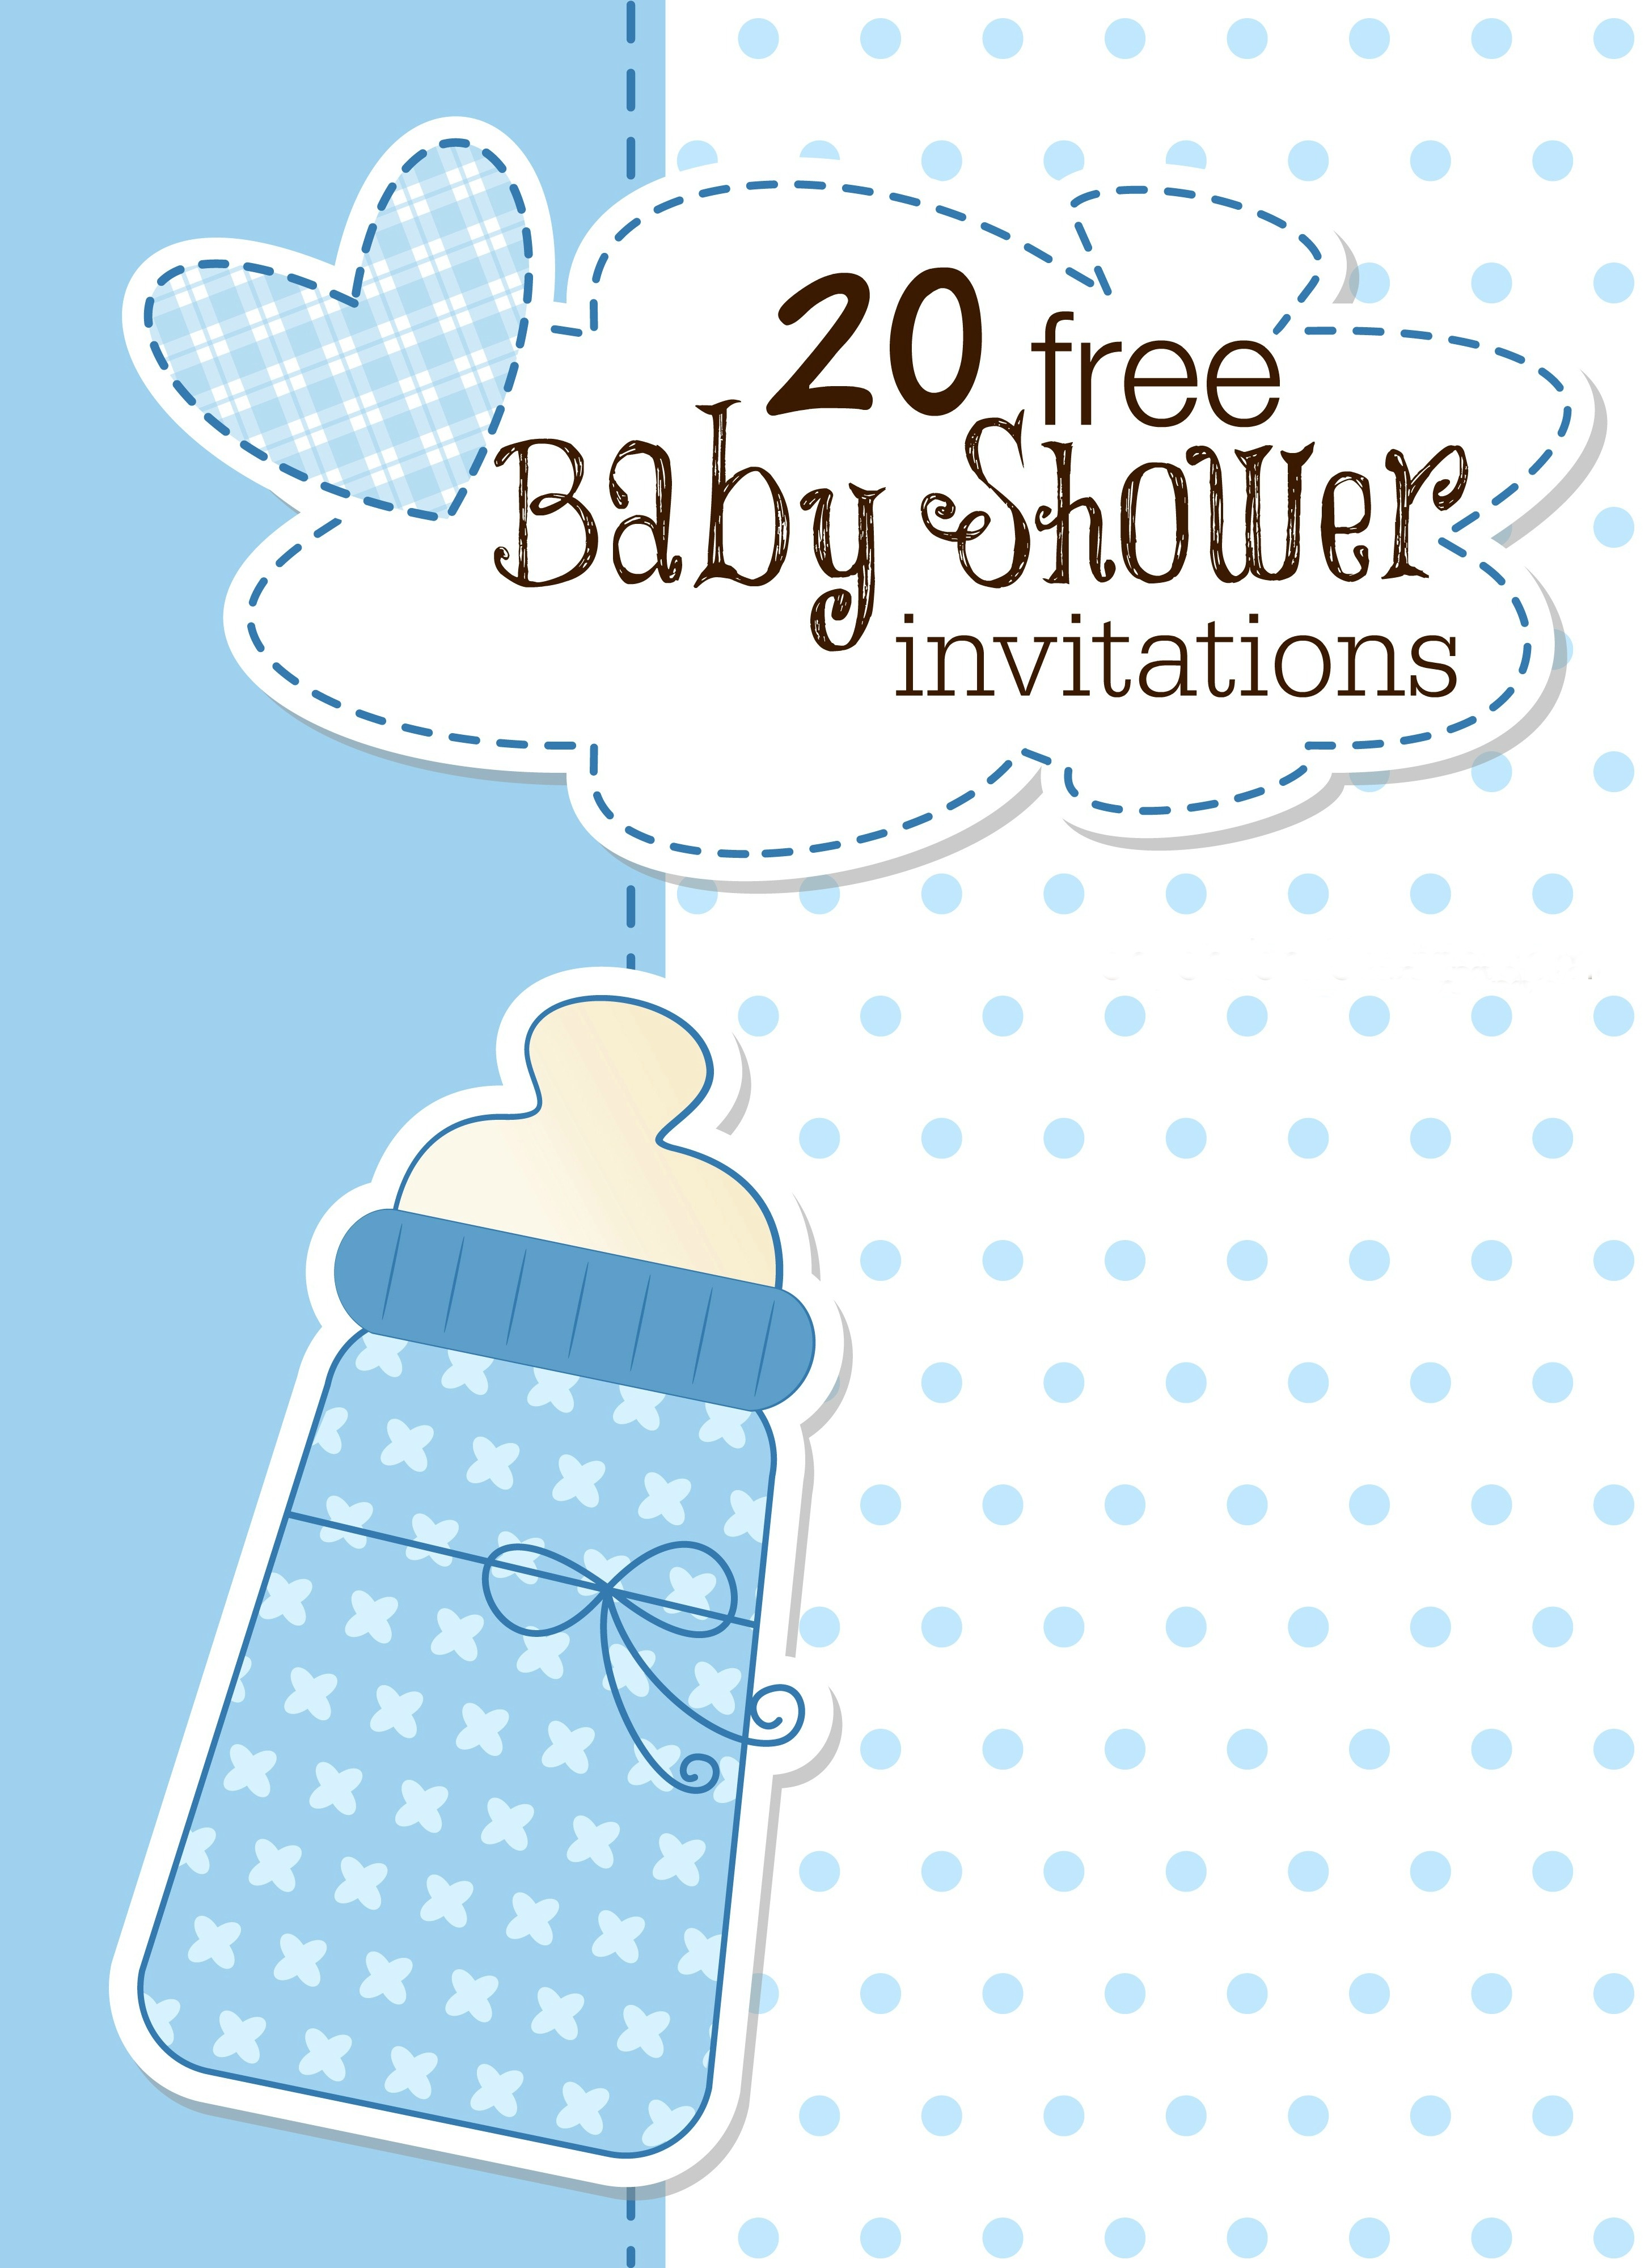 18 Printable Baby Shower Invites - Free Stork Party Invitations Printable